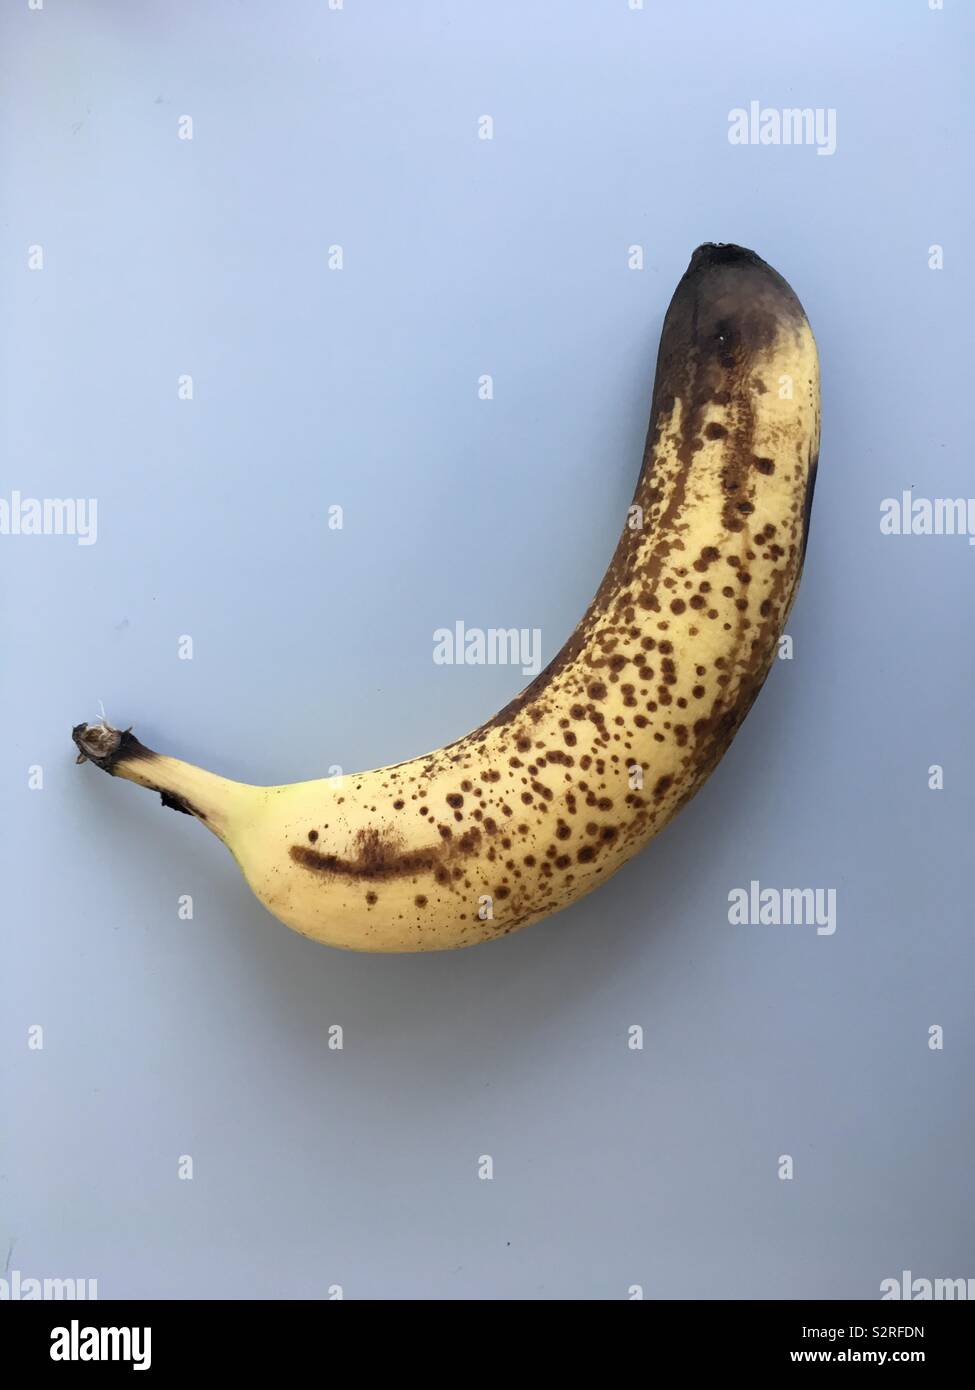 A single ripe banana on light grey background Stock Photo